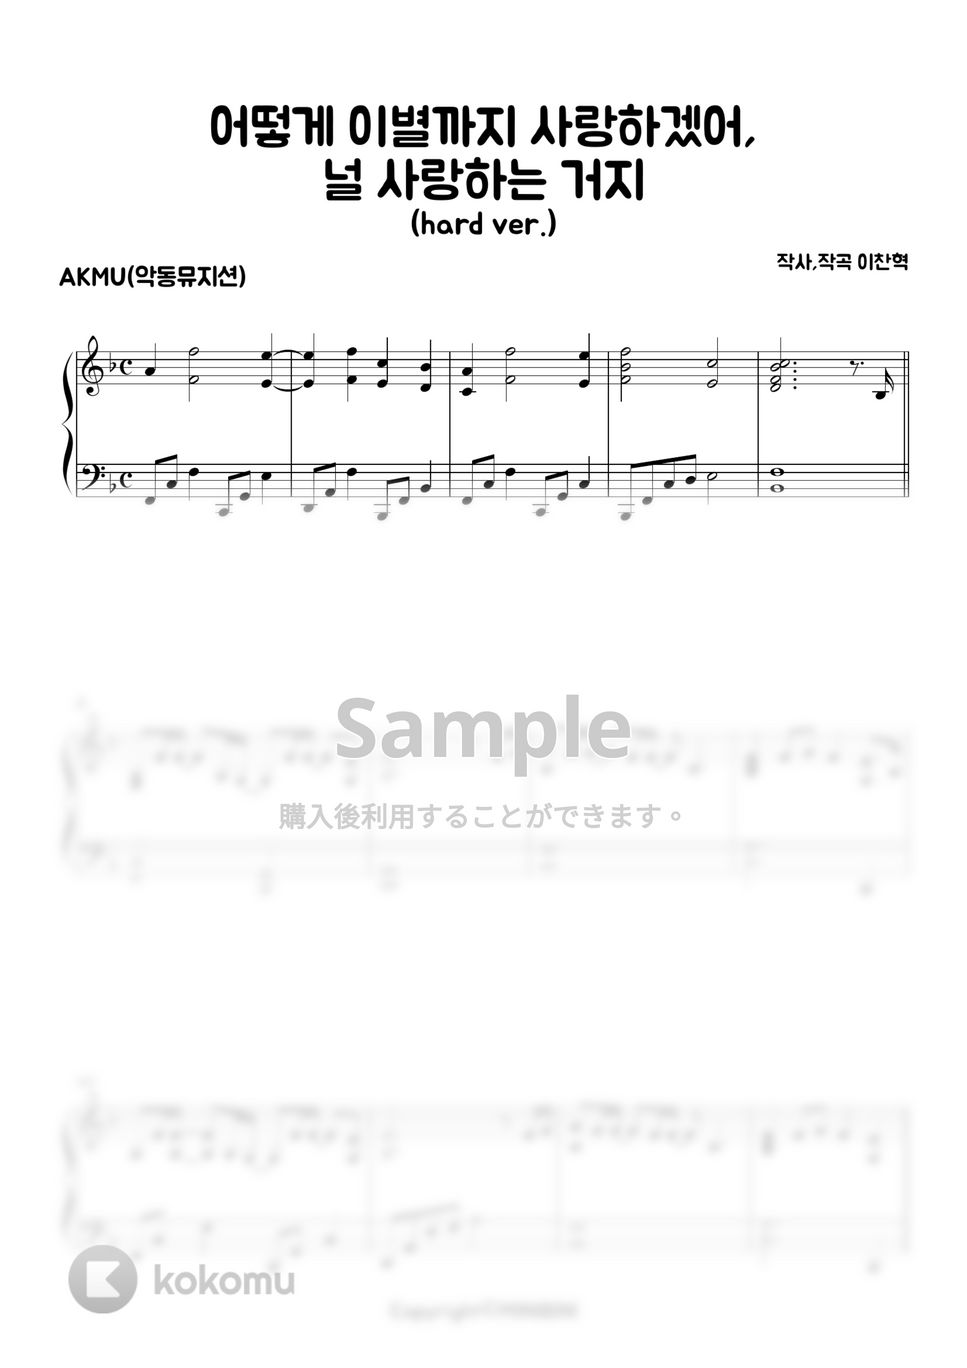 AKMU(悪童ミュージシャン) - How I can love the heartbreak (Hard ver.) by MINIBINI